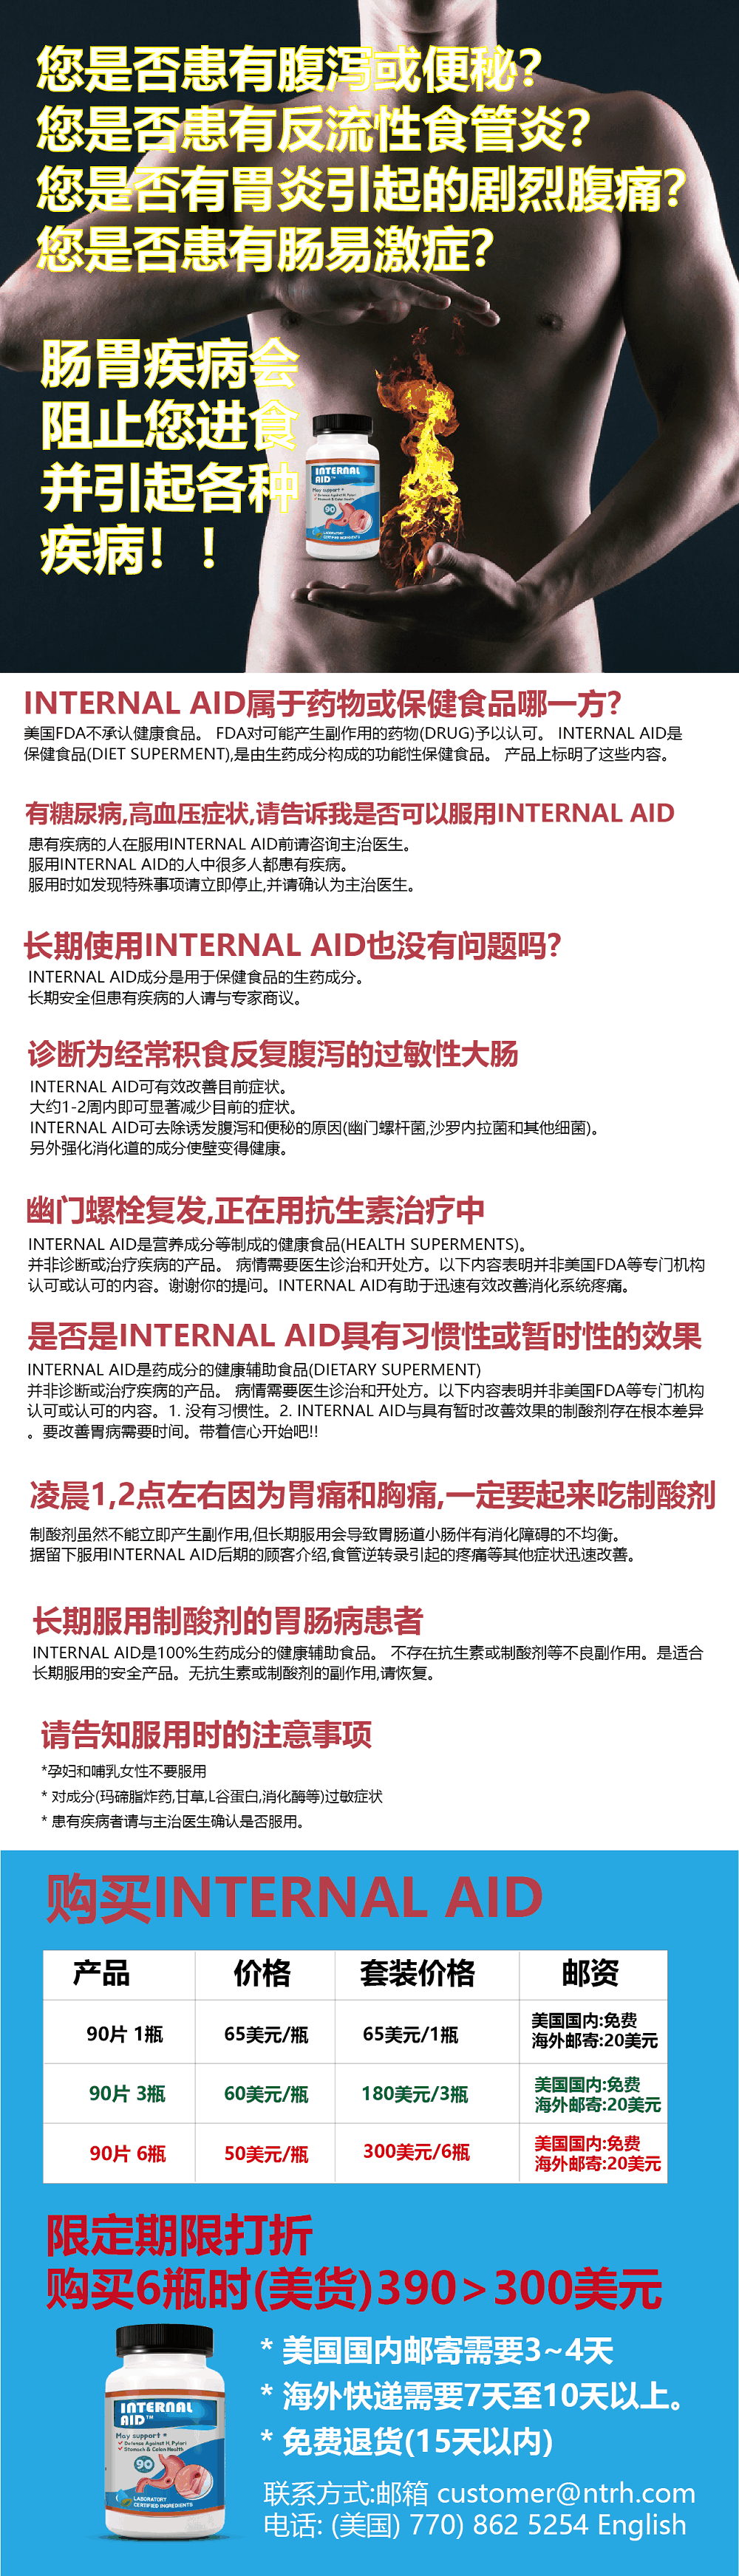 Internalaid FAQ  CN.png